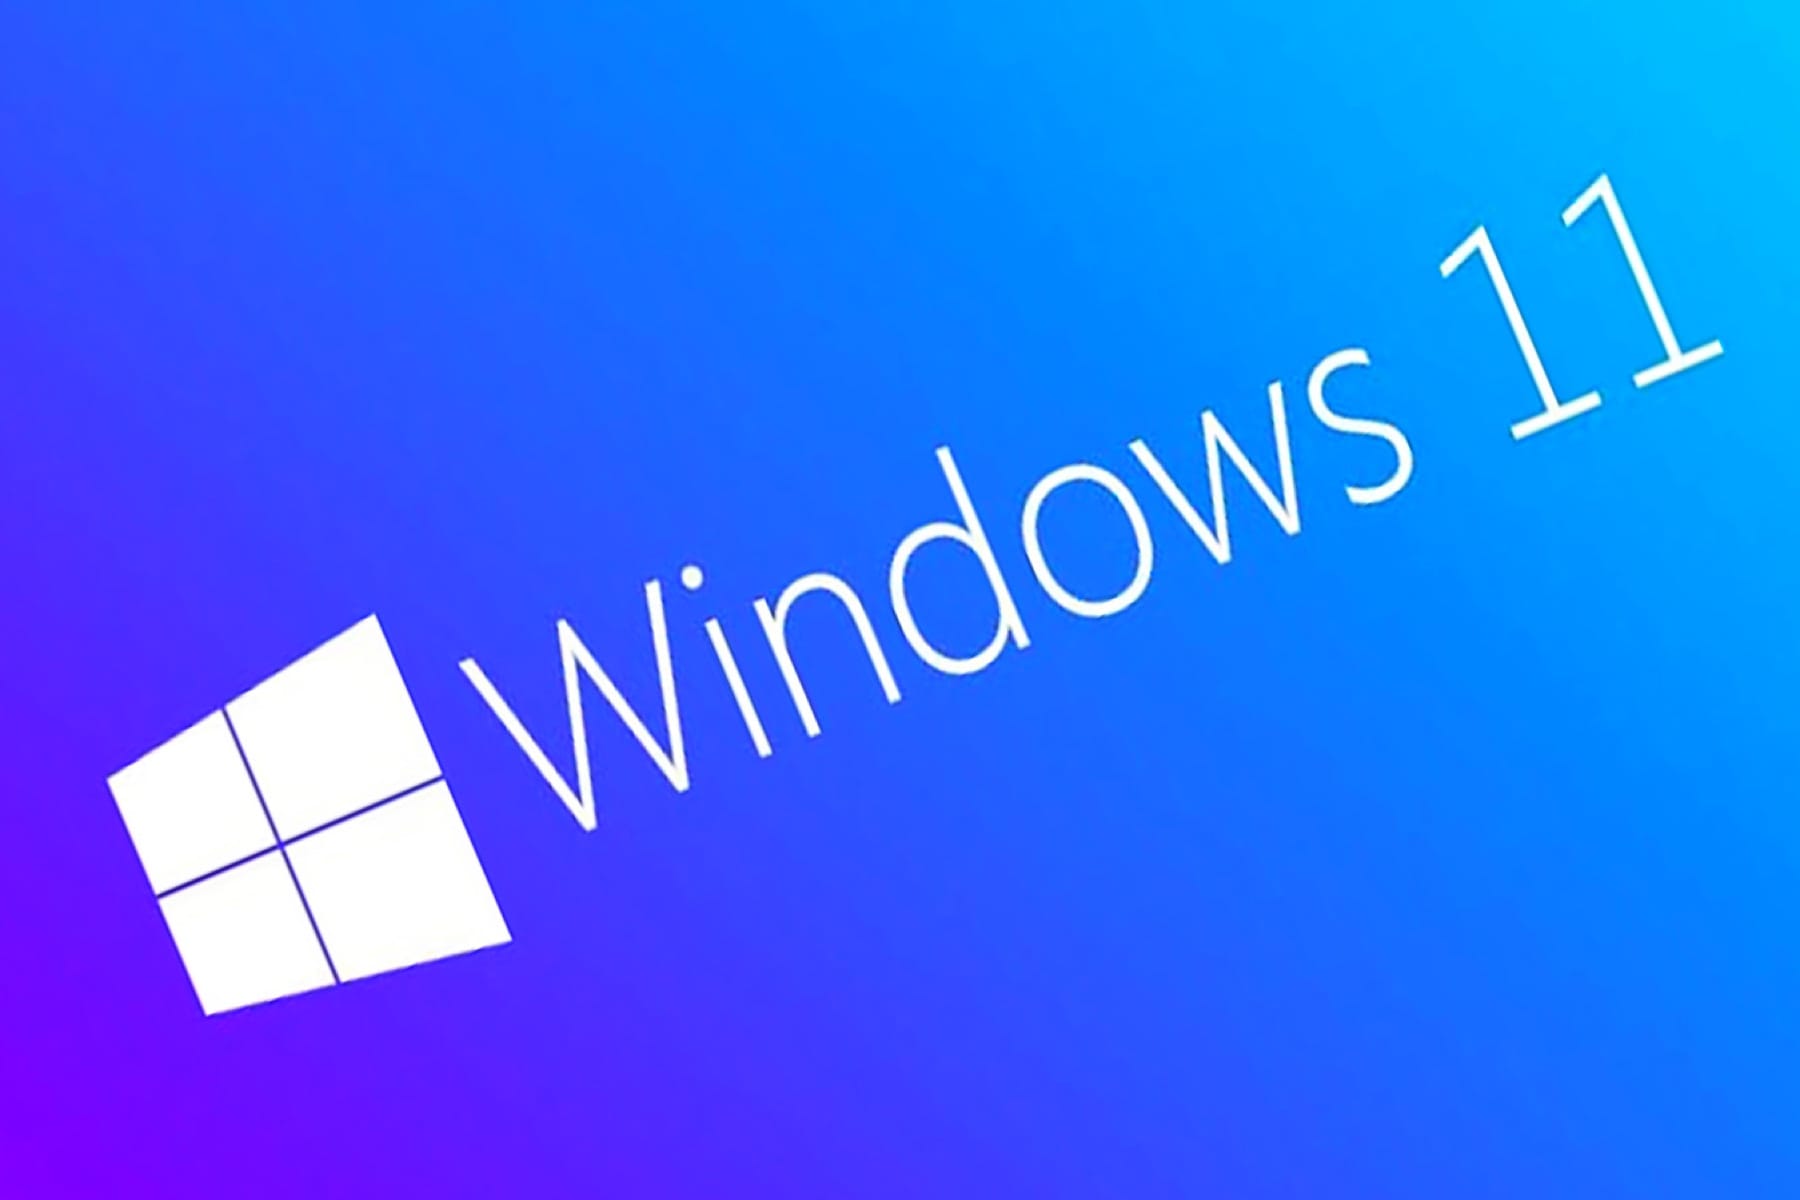 Windows 11 23h2 compact. Виндовс. Шиндовс 11. Операционная система Microsoft Windows 11. Значок виндовс 11.